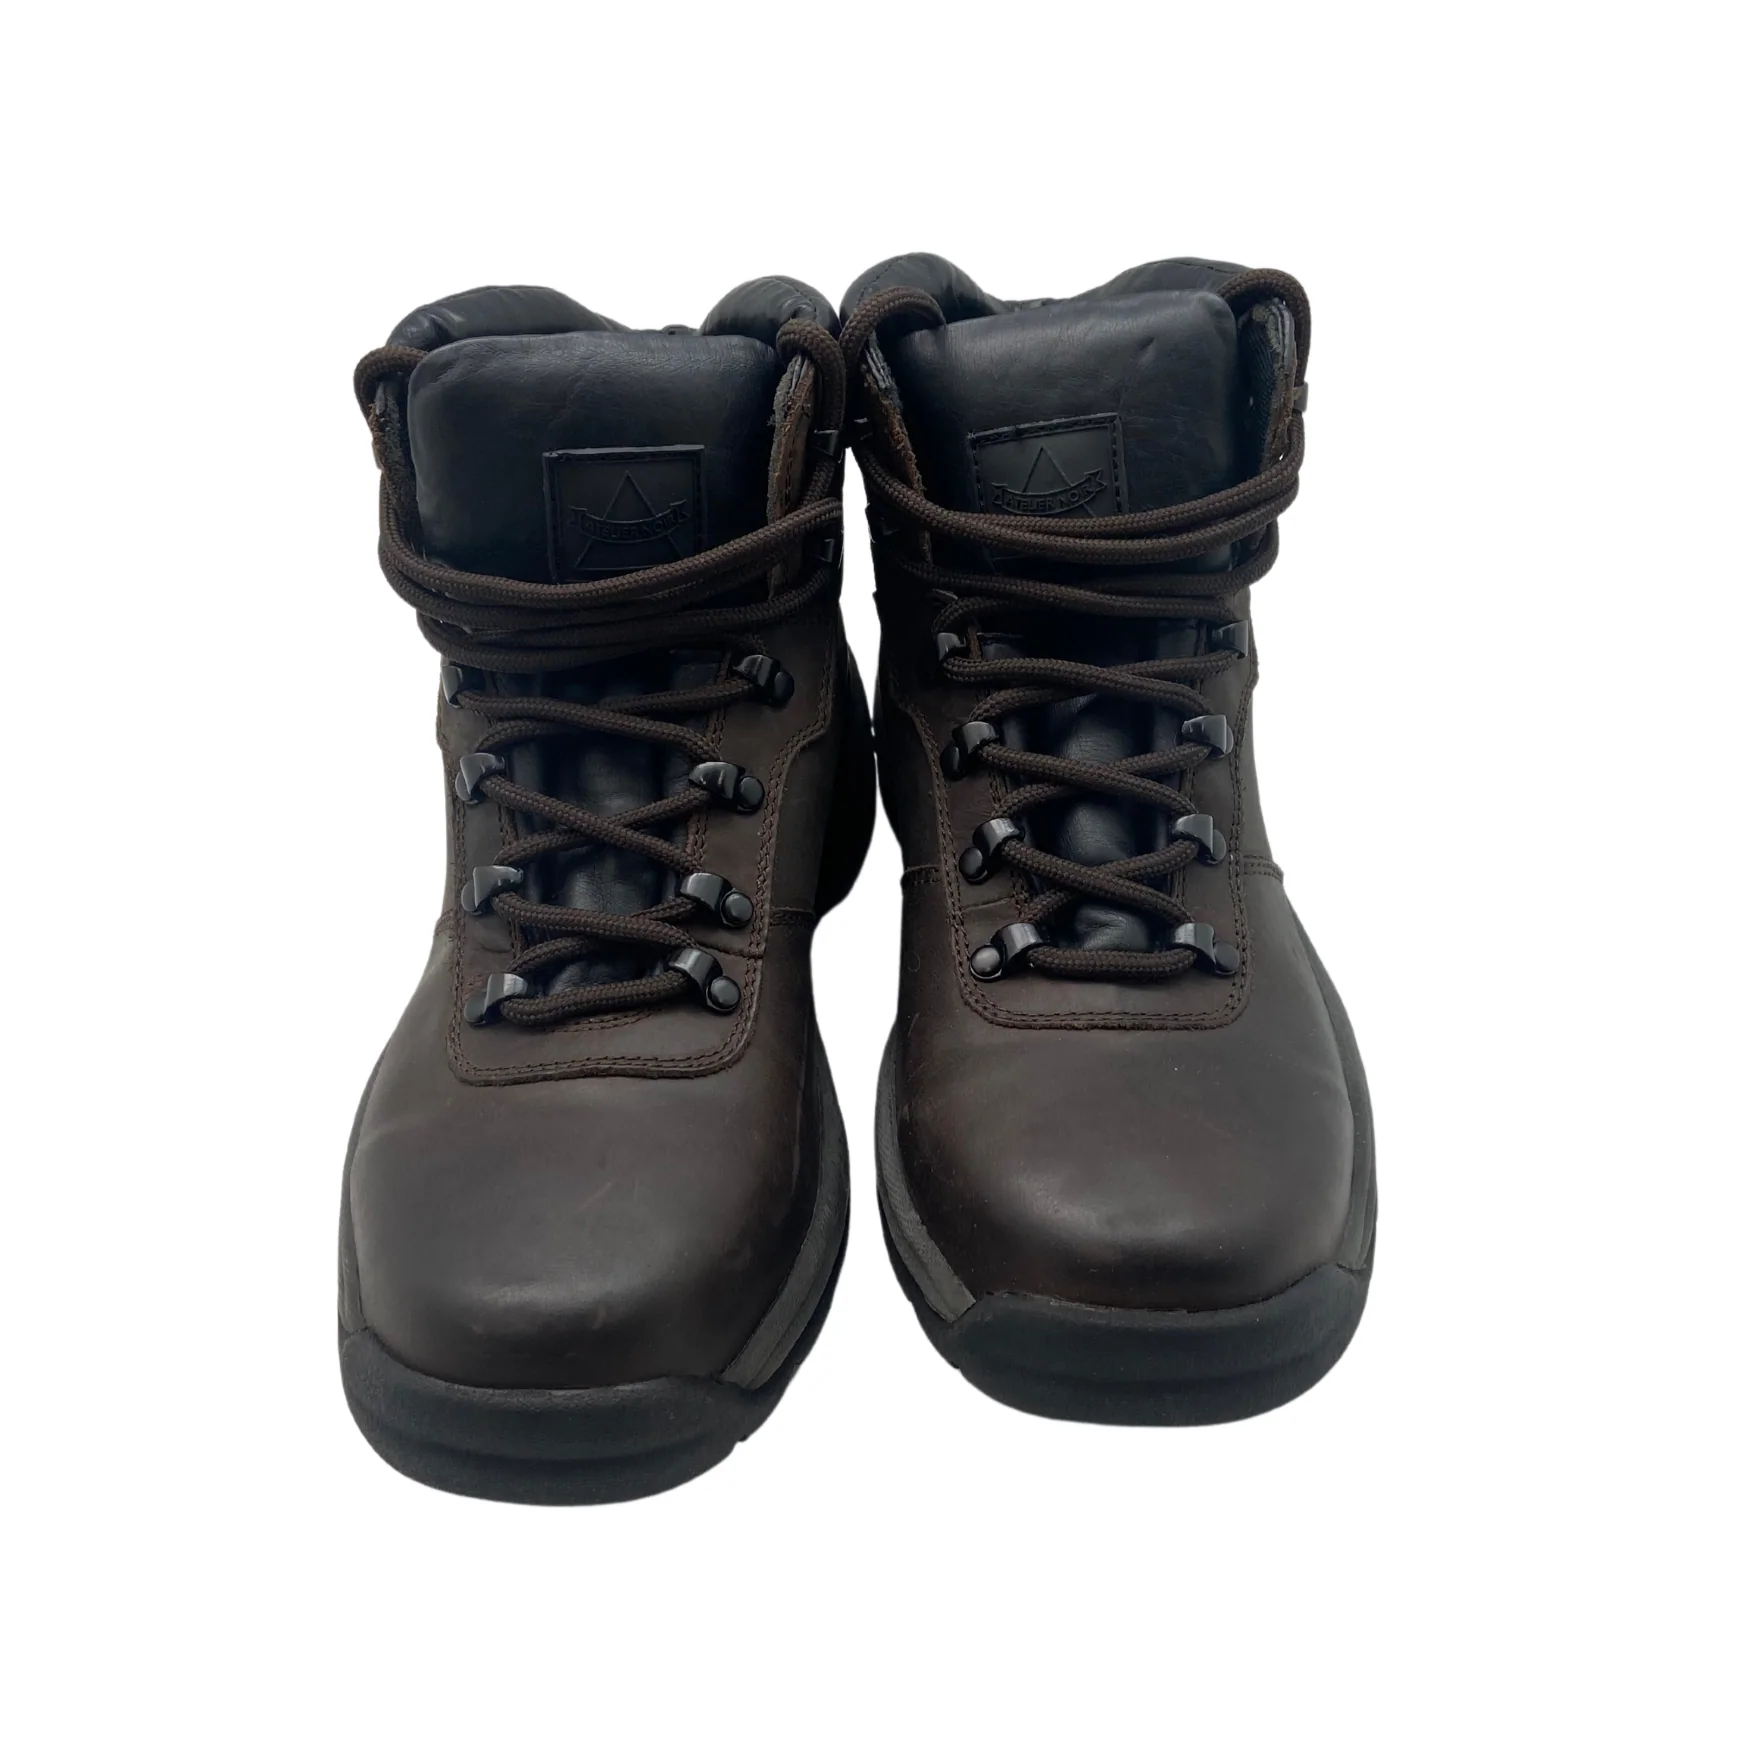 Atelier Noir: Women's Boots / Hiking Boots / Dark Brown / Size 8